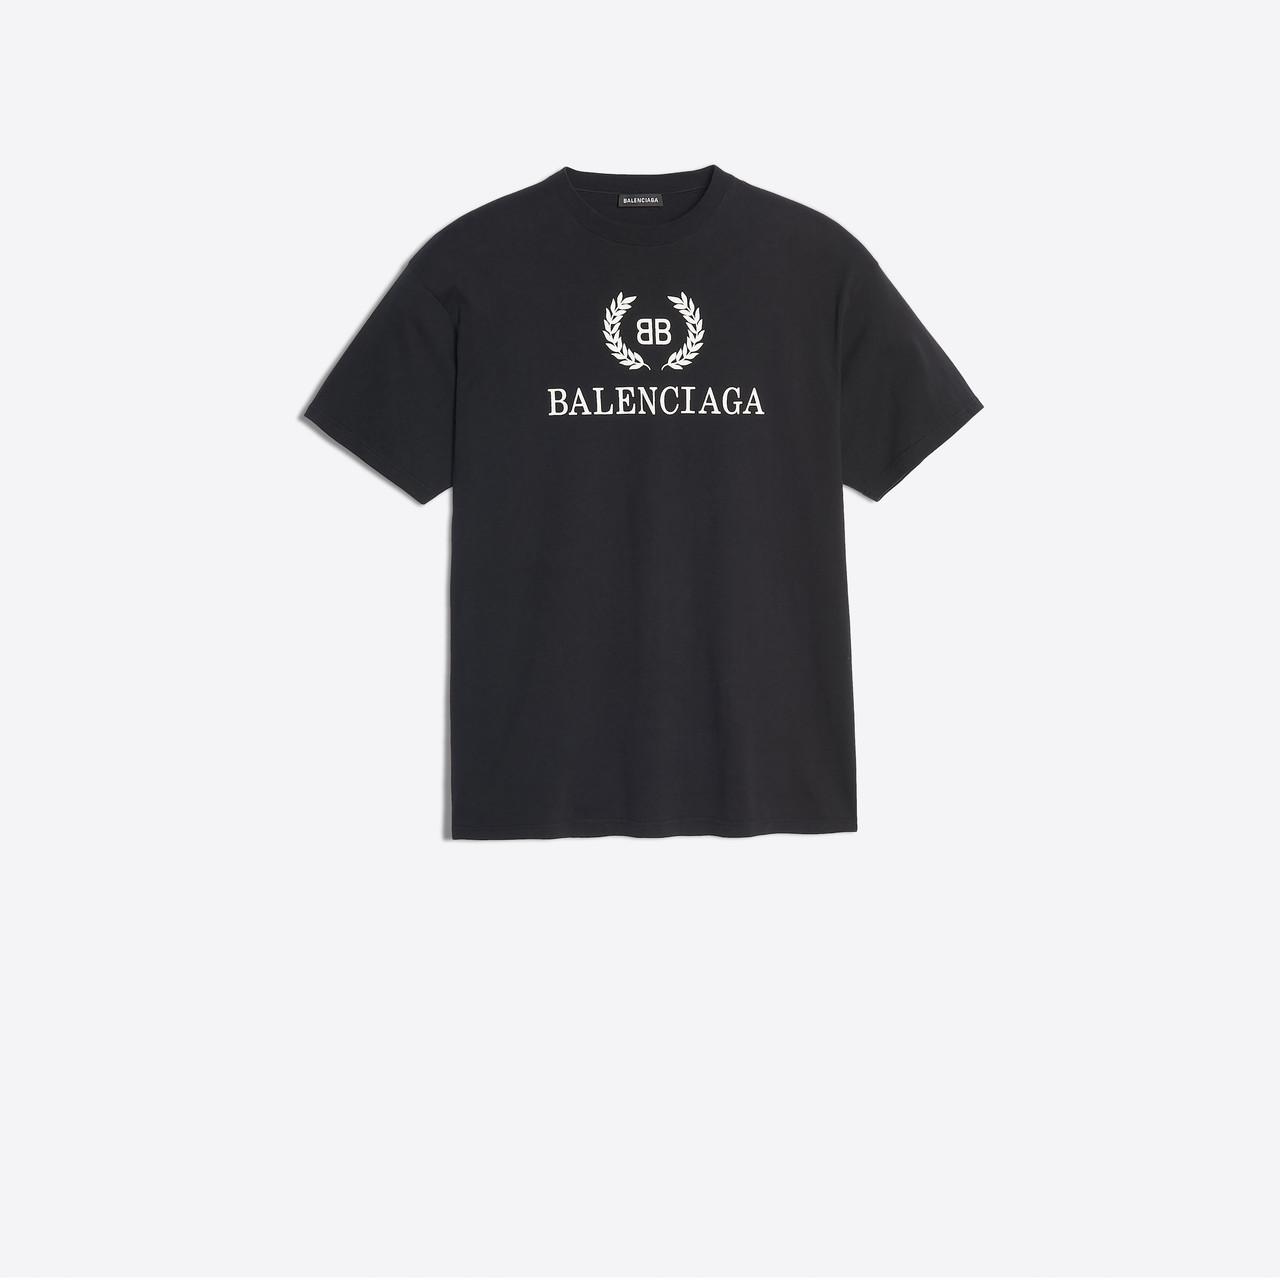 Balenciaga Bb T-shirt in Black for Men - Lyst